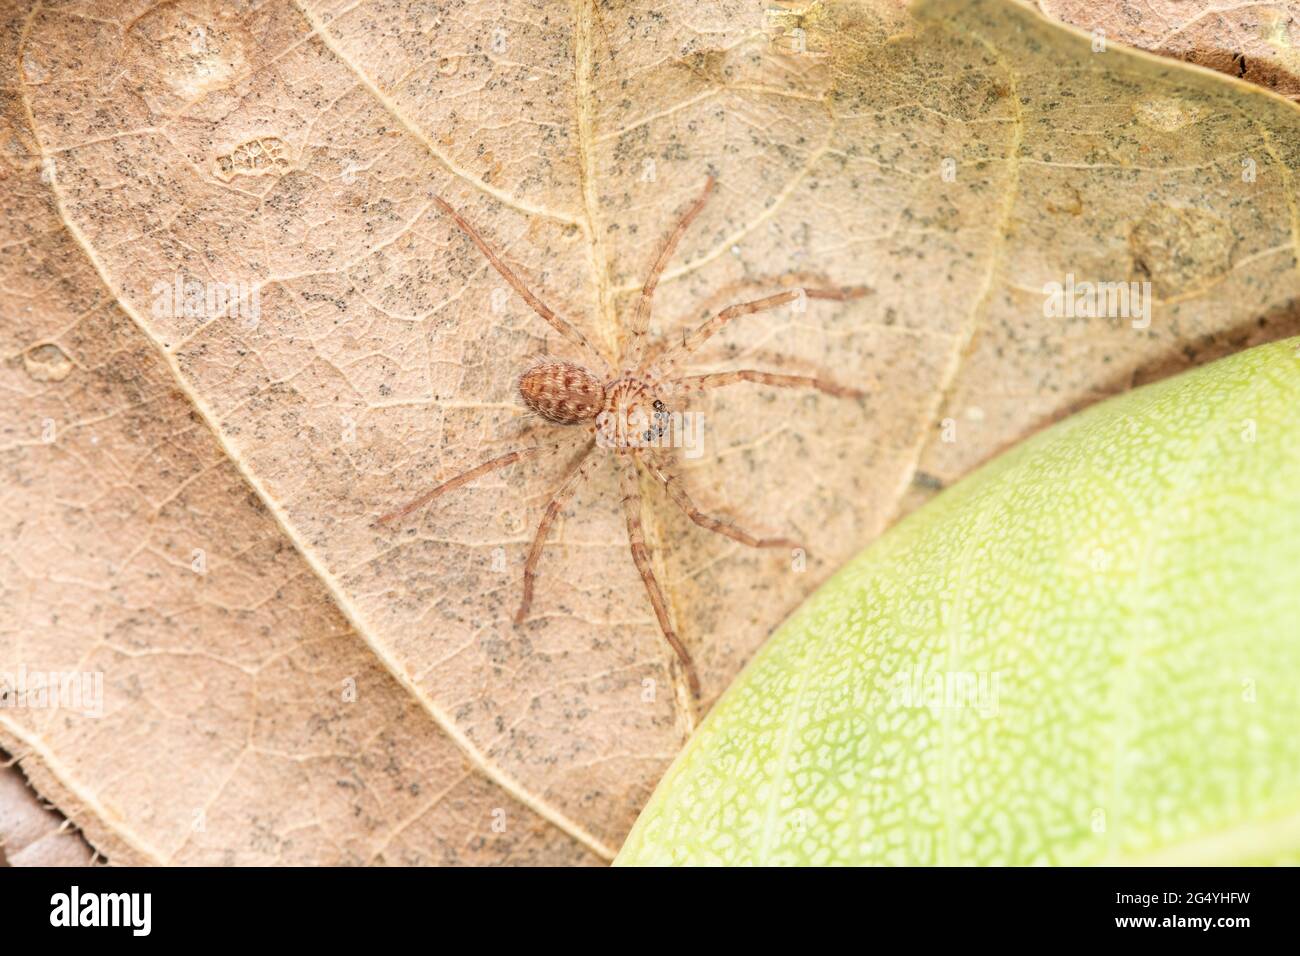 Spiderling second instar Huntsman spider, Heteropoda venatoria, Satara, Maharashtra, India Stock Photo